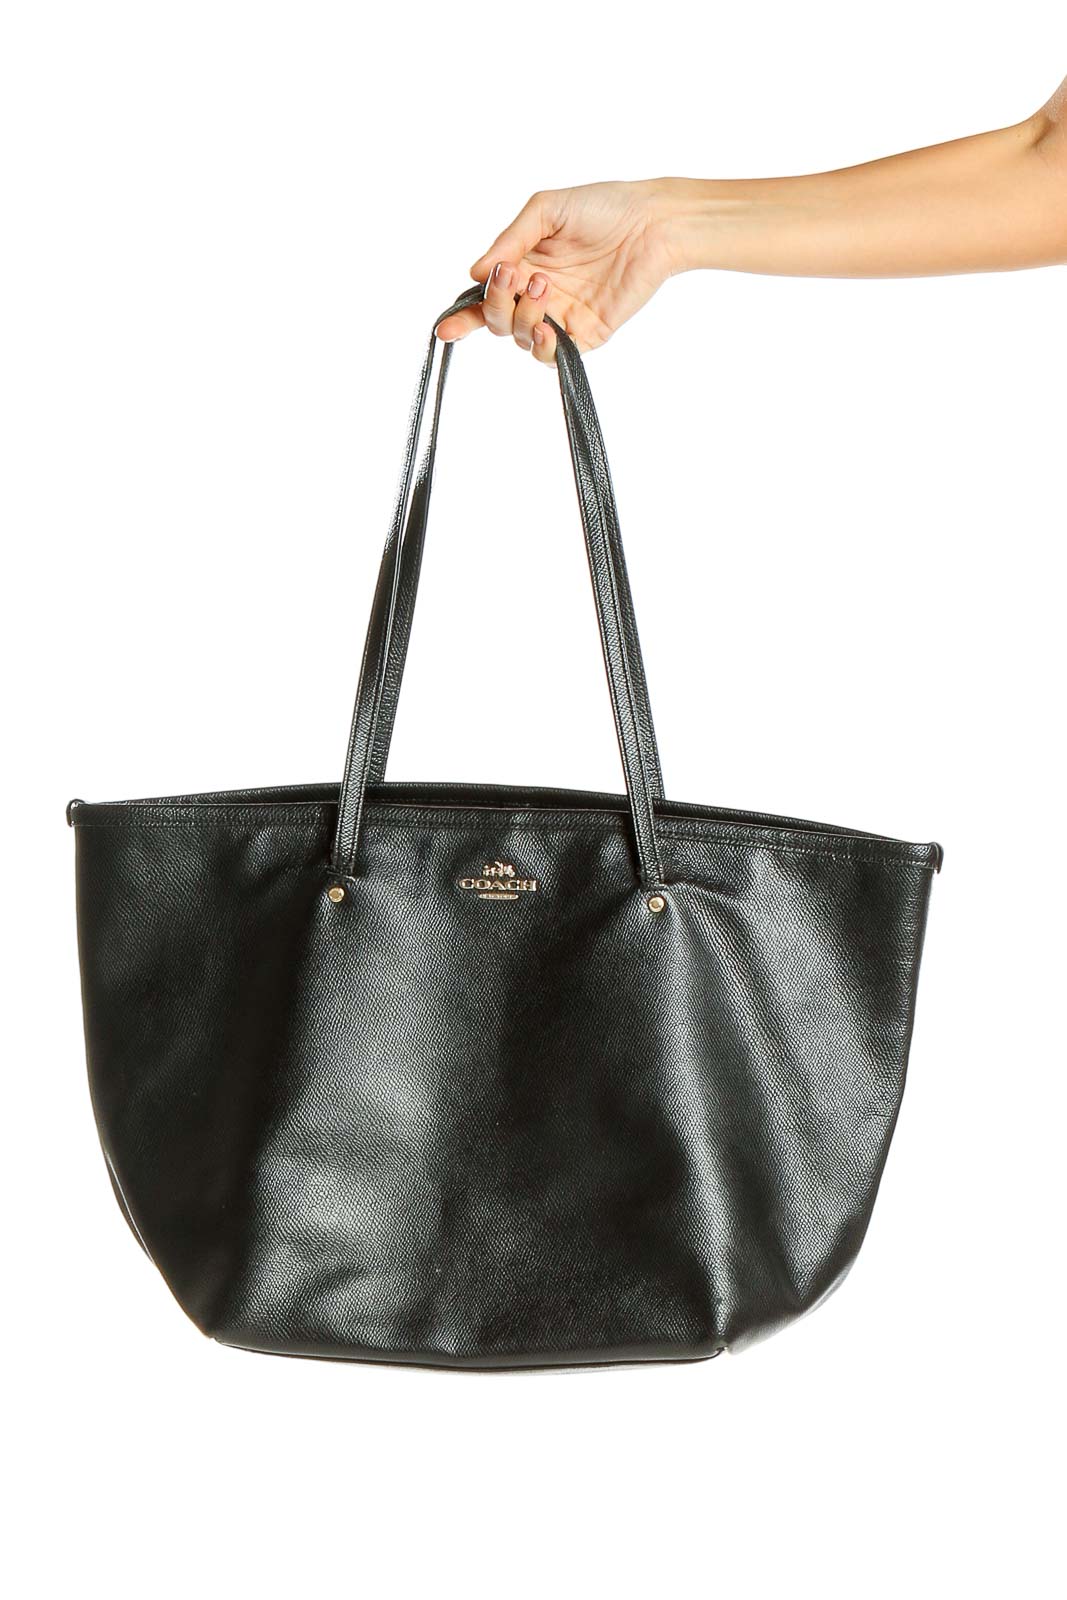 Black Leather Large Tote Bag Front